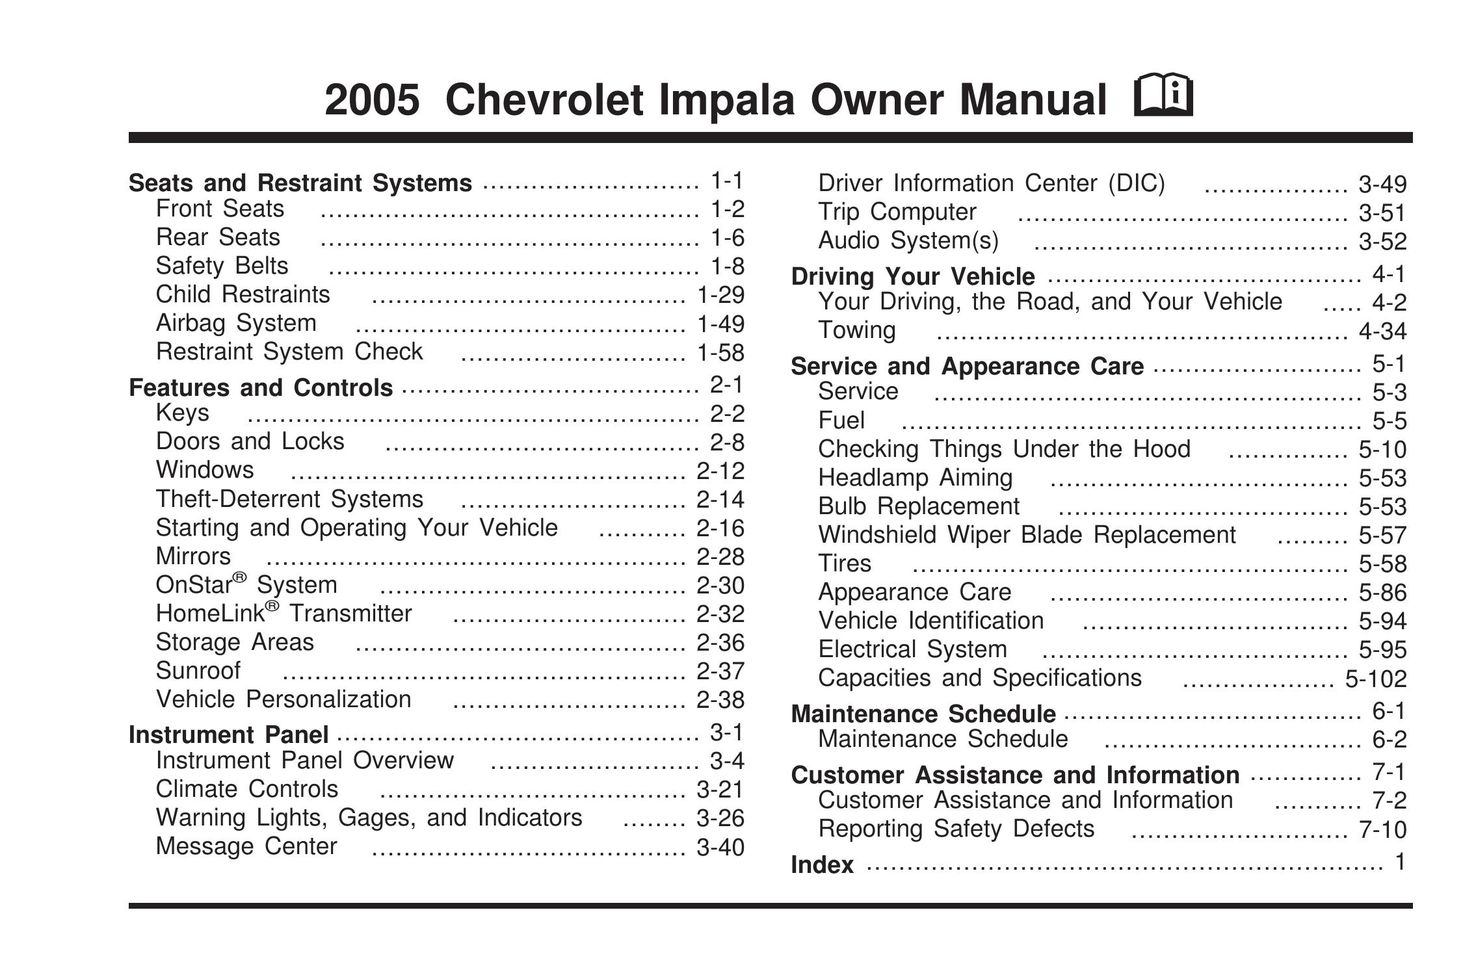 Chevrolet 2005 Paint Sprayer User Manual